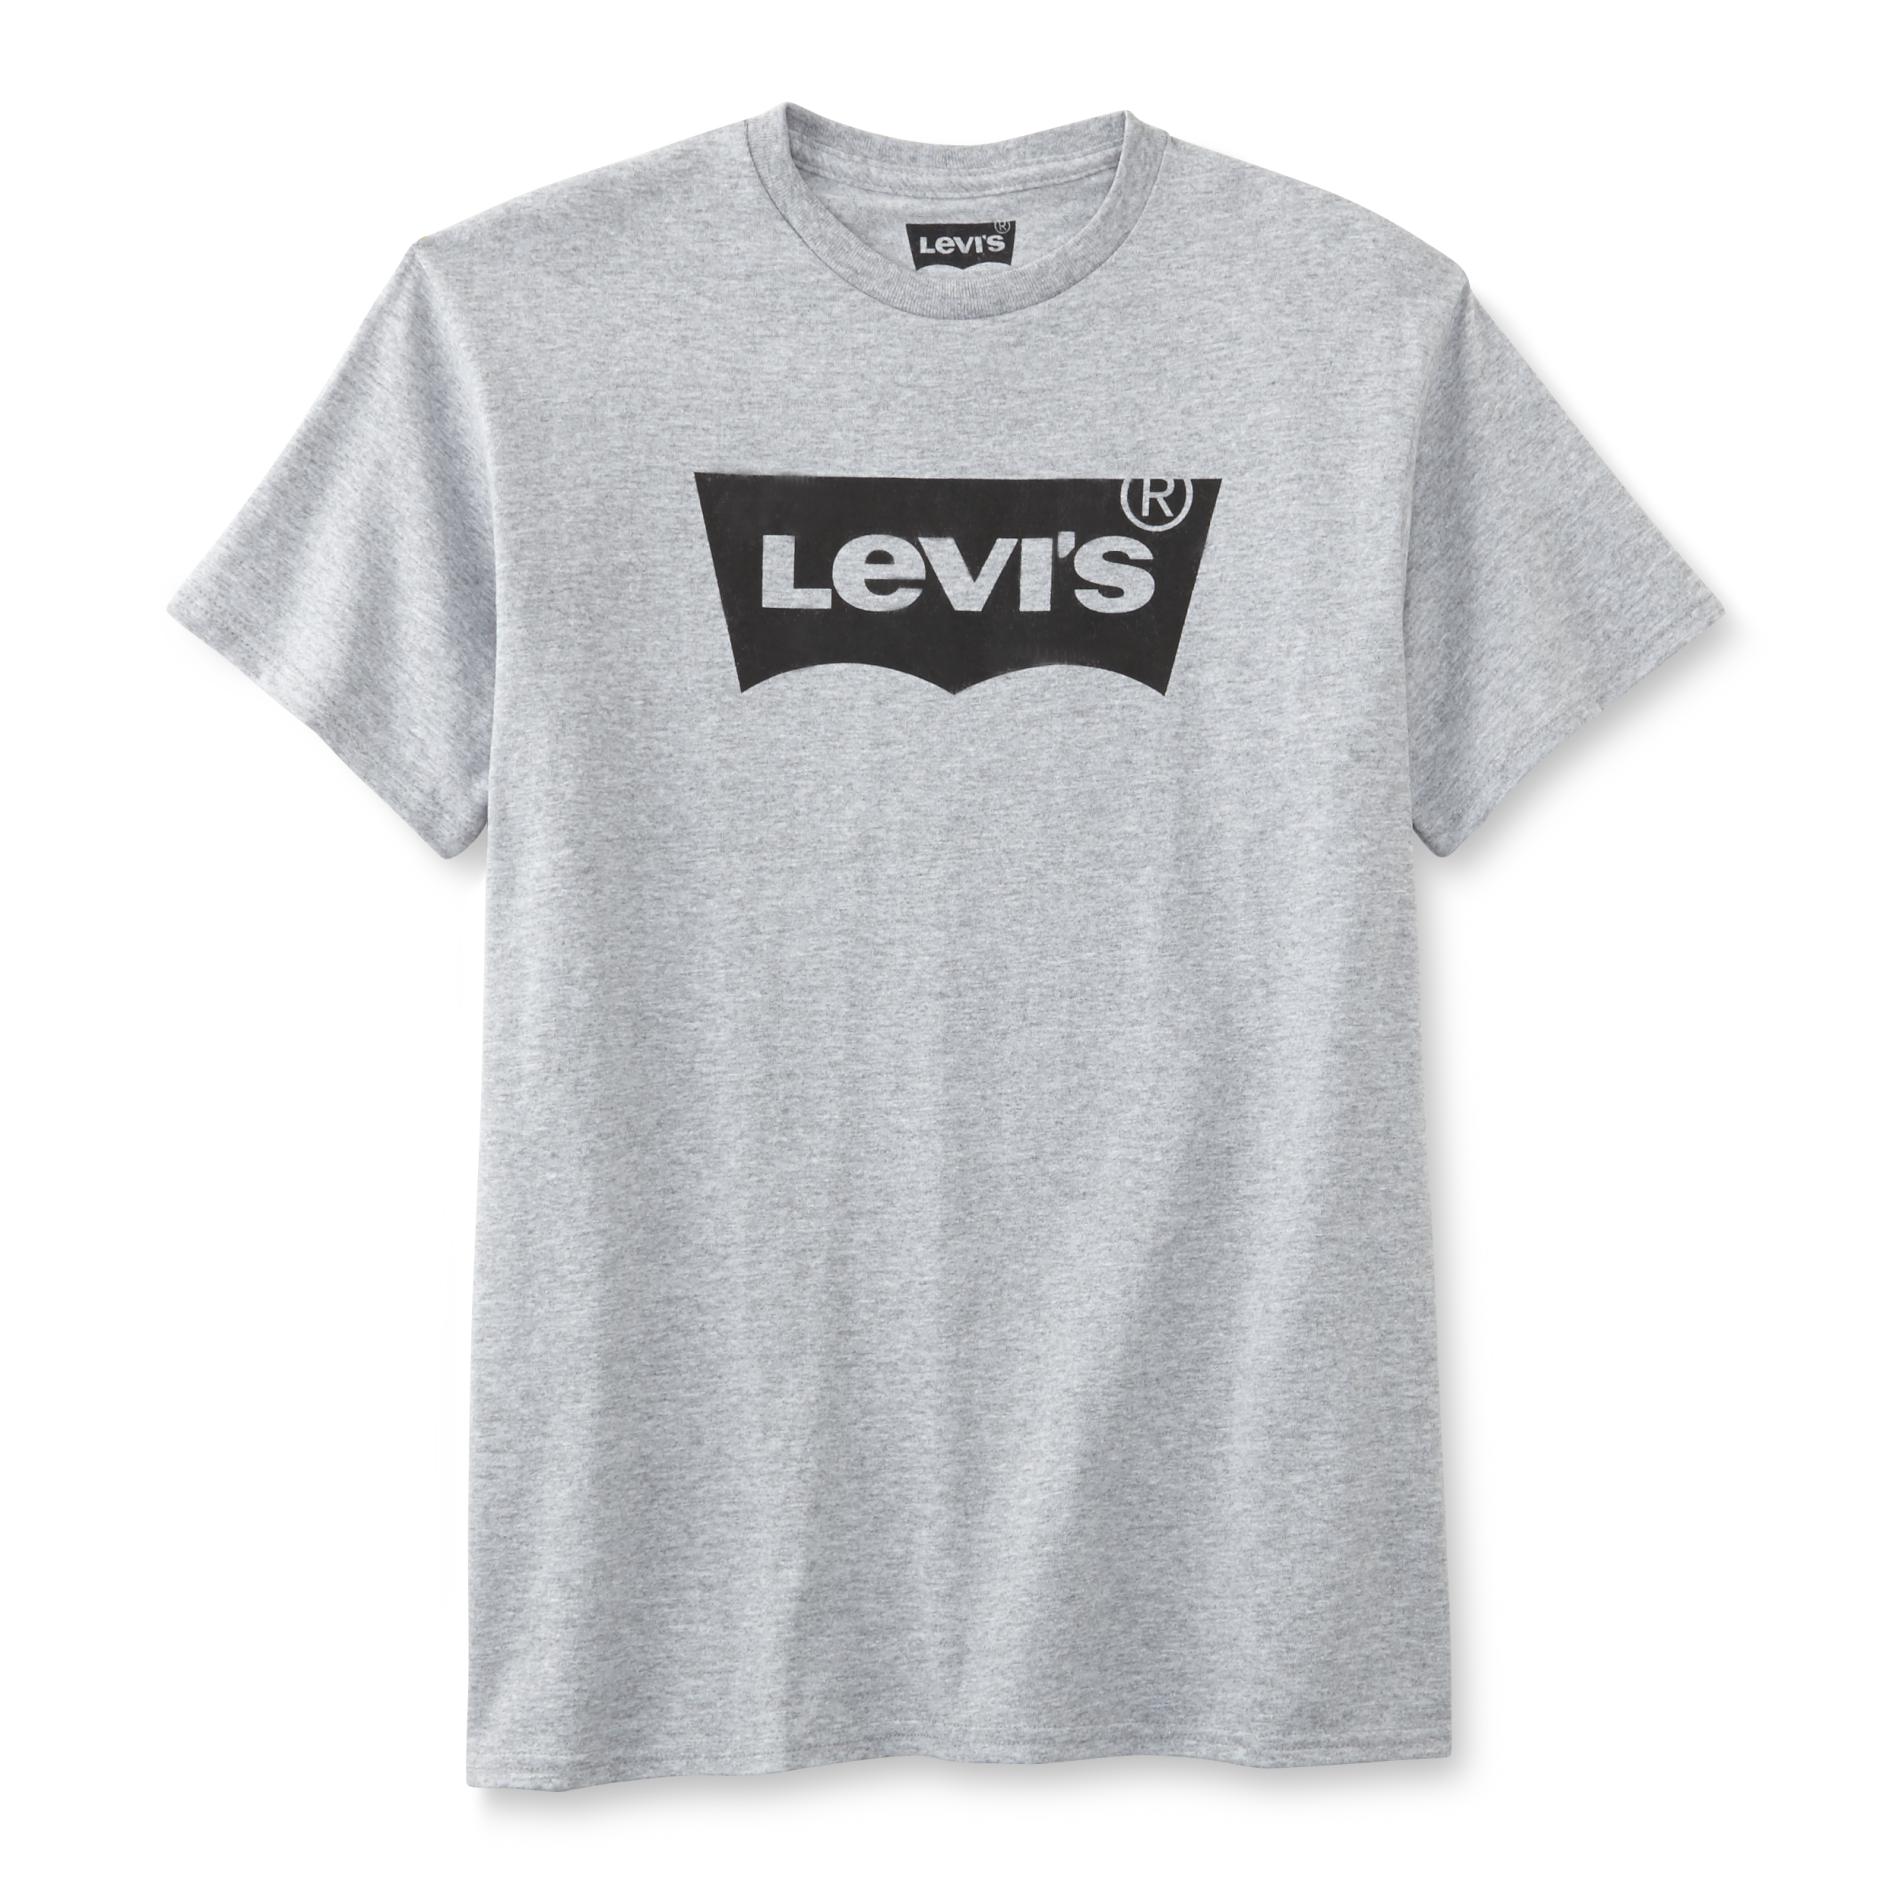 levis black shirt price